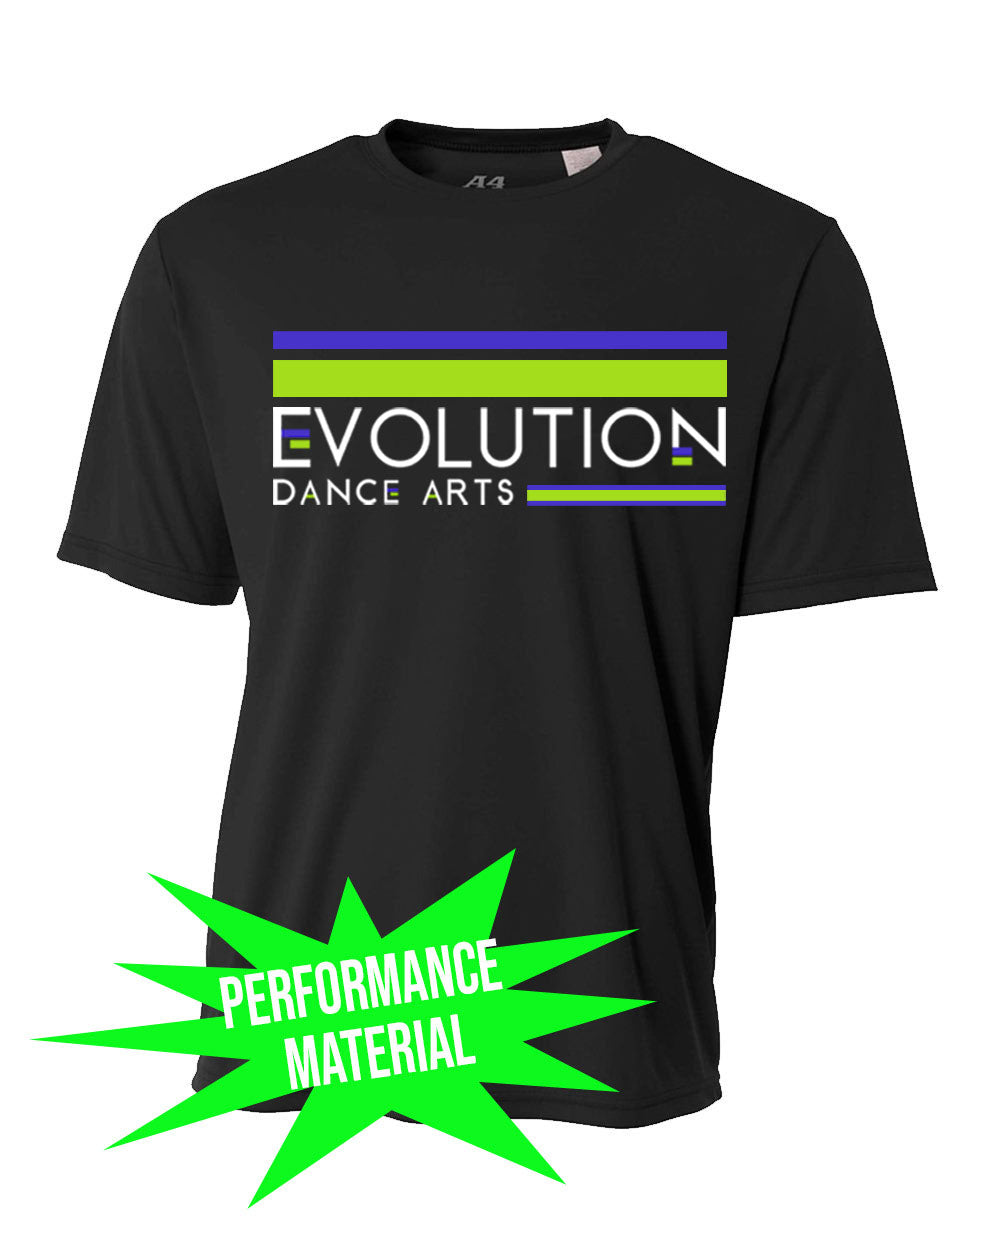 Evolution Dance Arts Performance Material design 3 T-Shirt